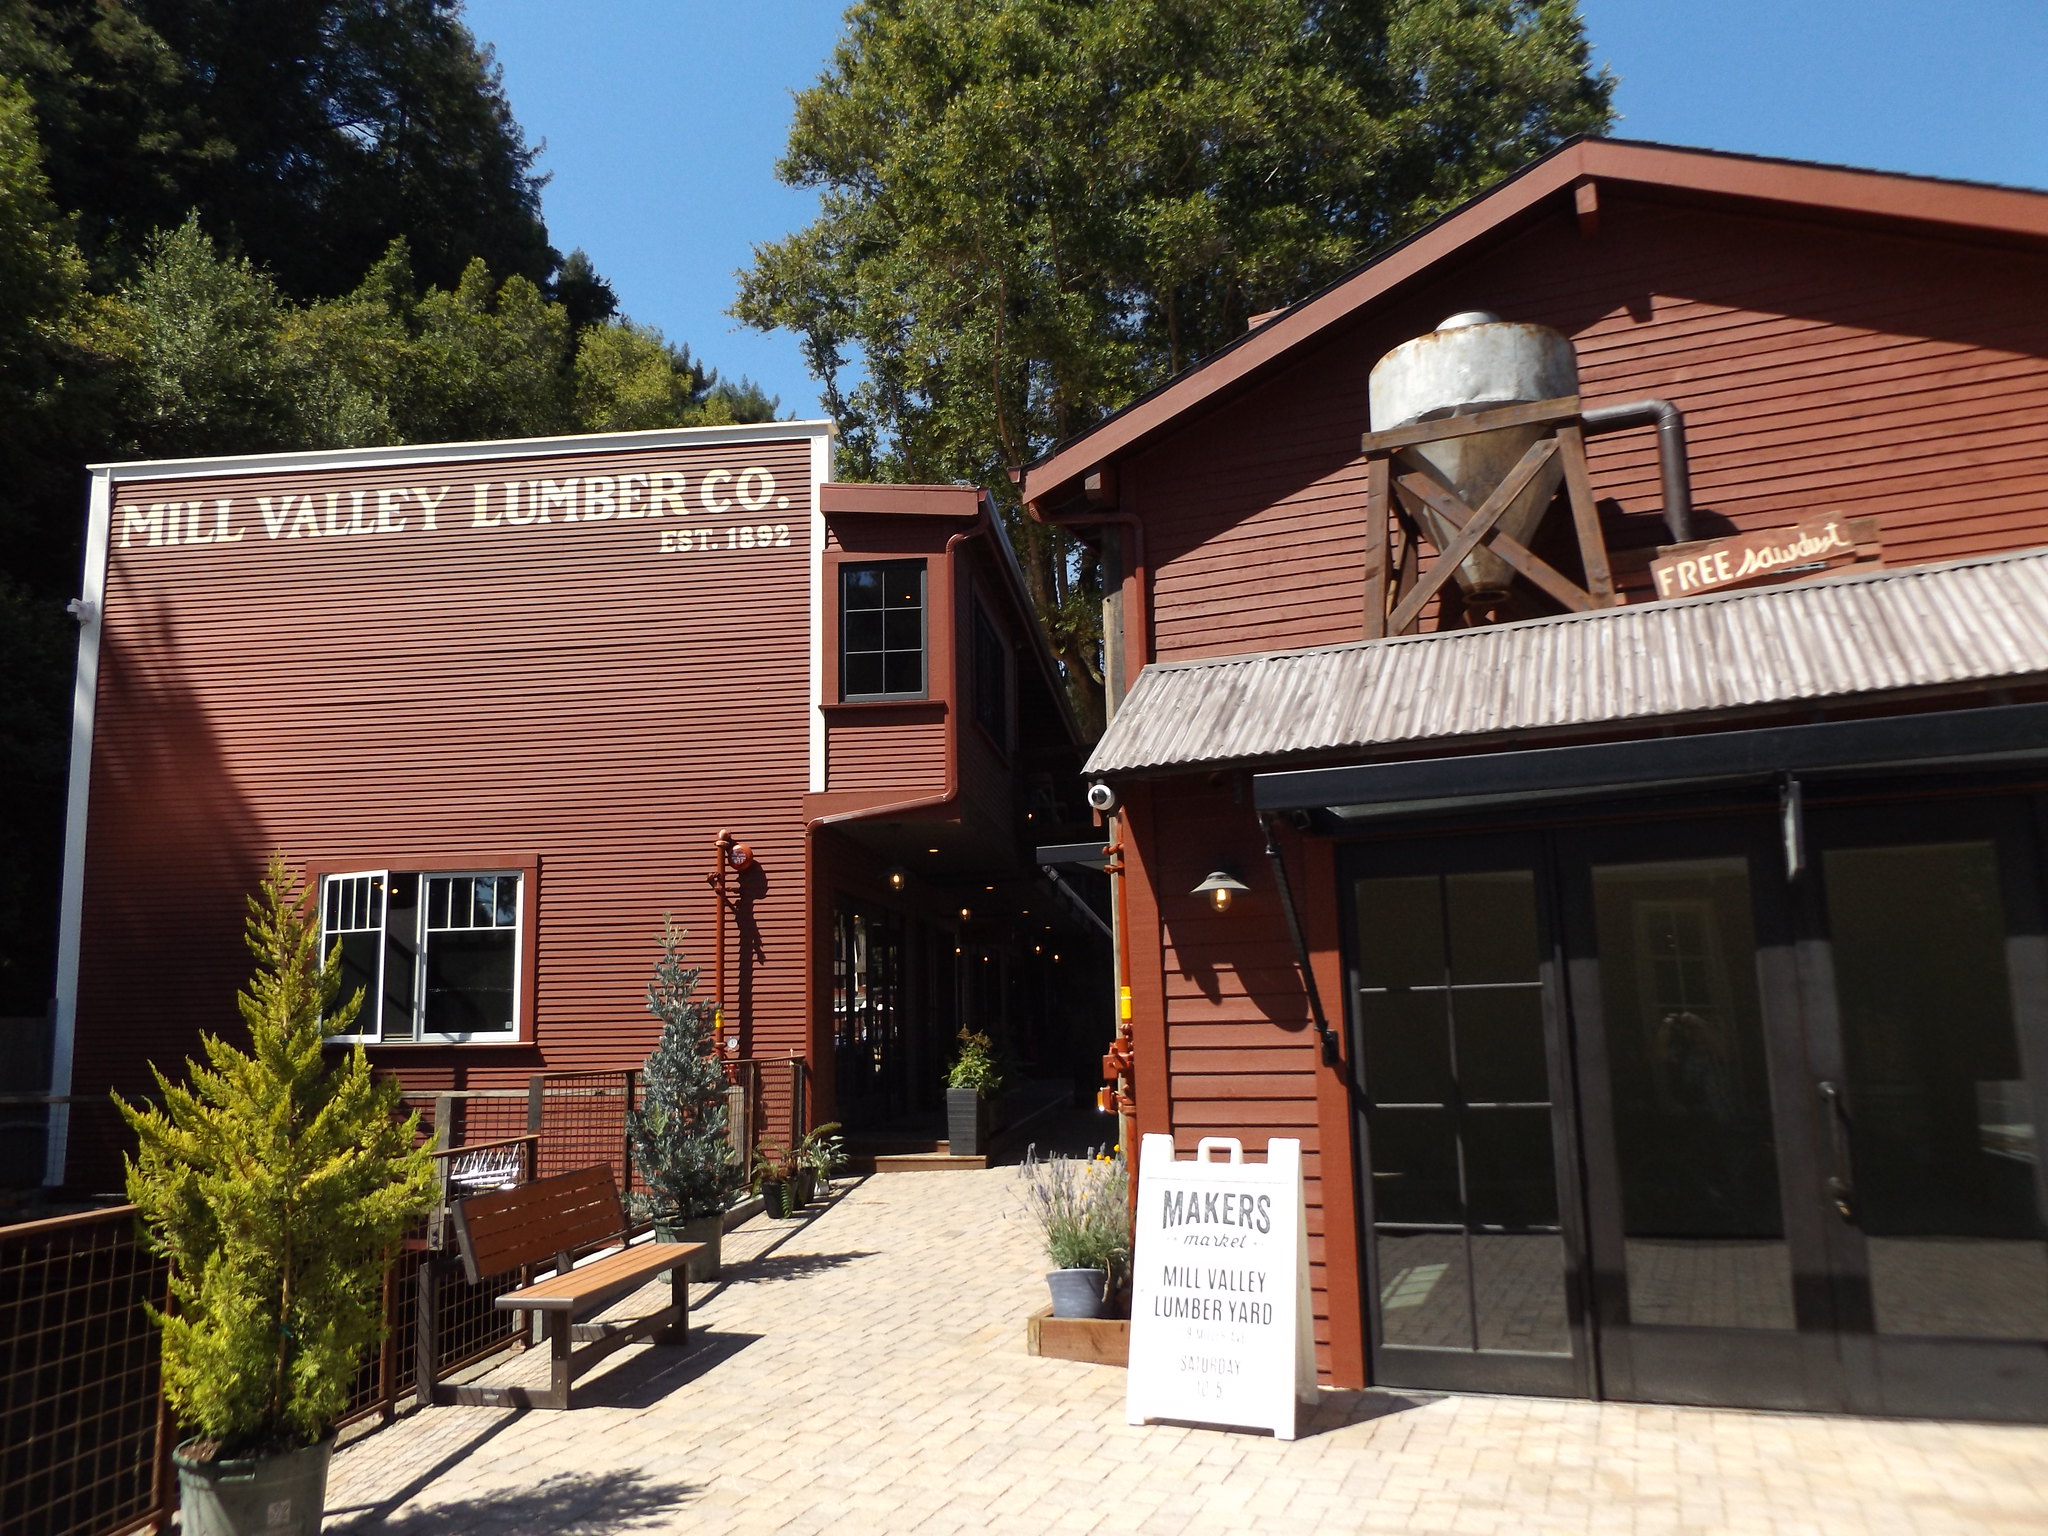 Mill Valley Lumber Yard, Marin County, California, USA, 7 September 2018